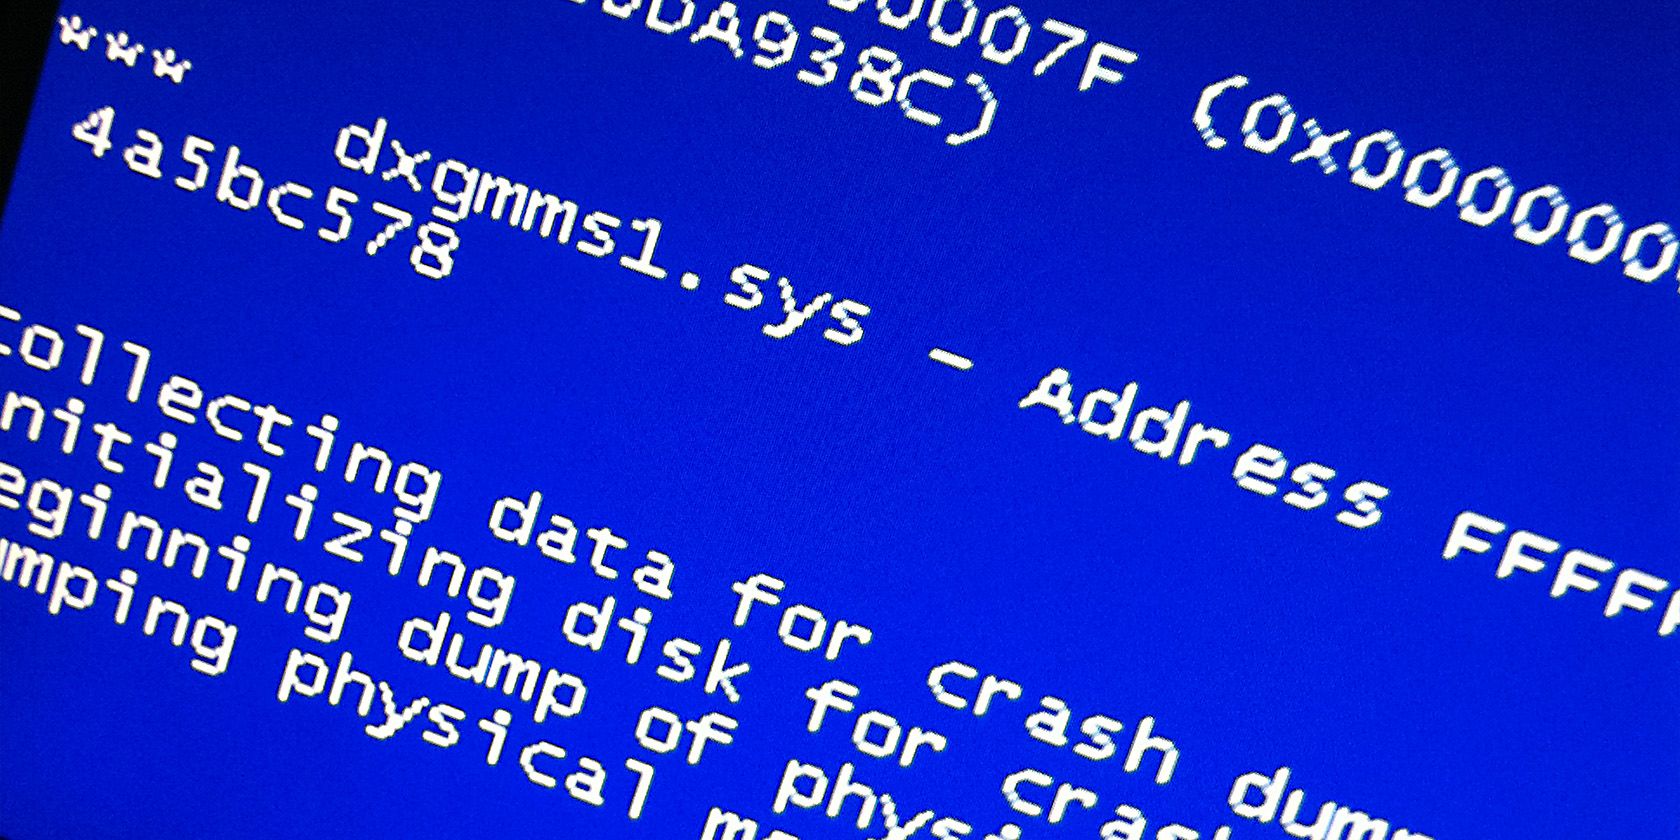 BSOD error on an old Windows PC